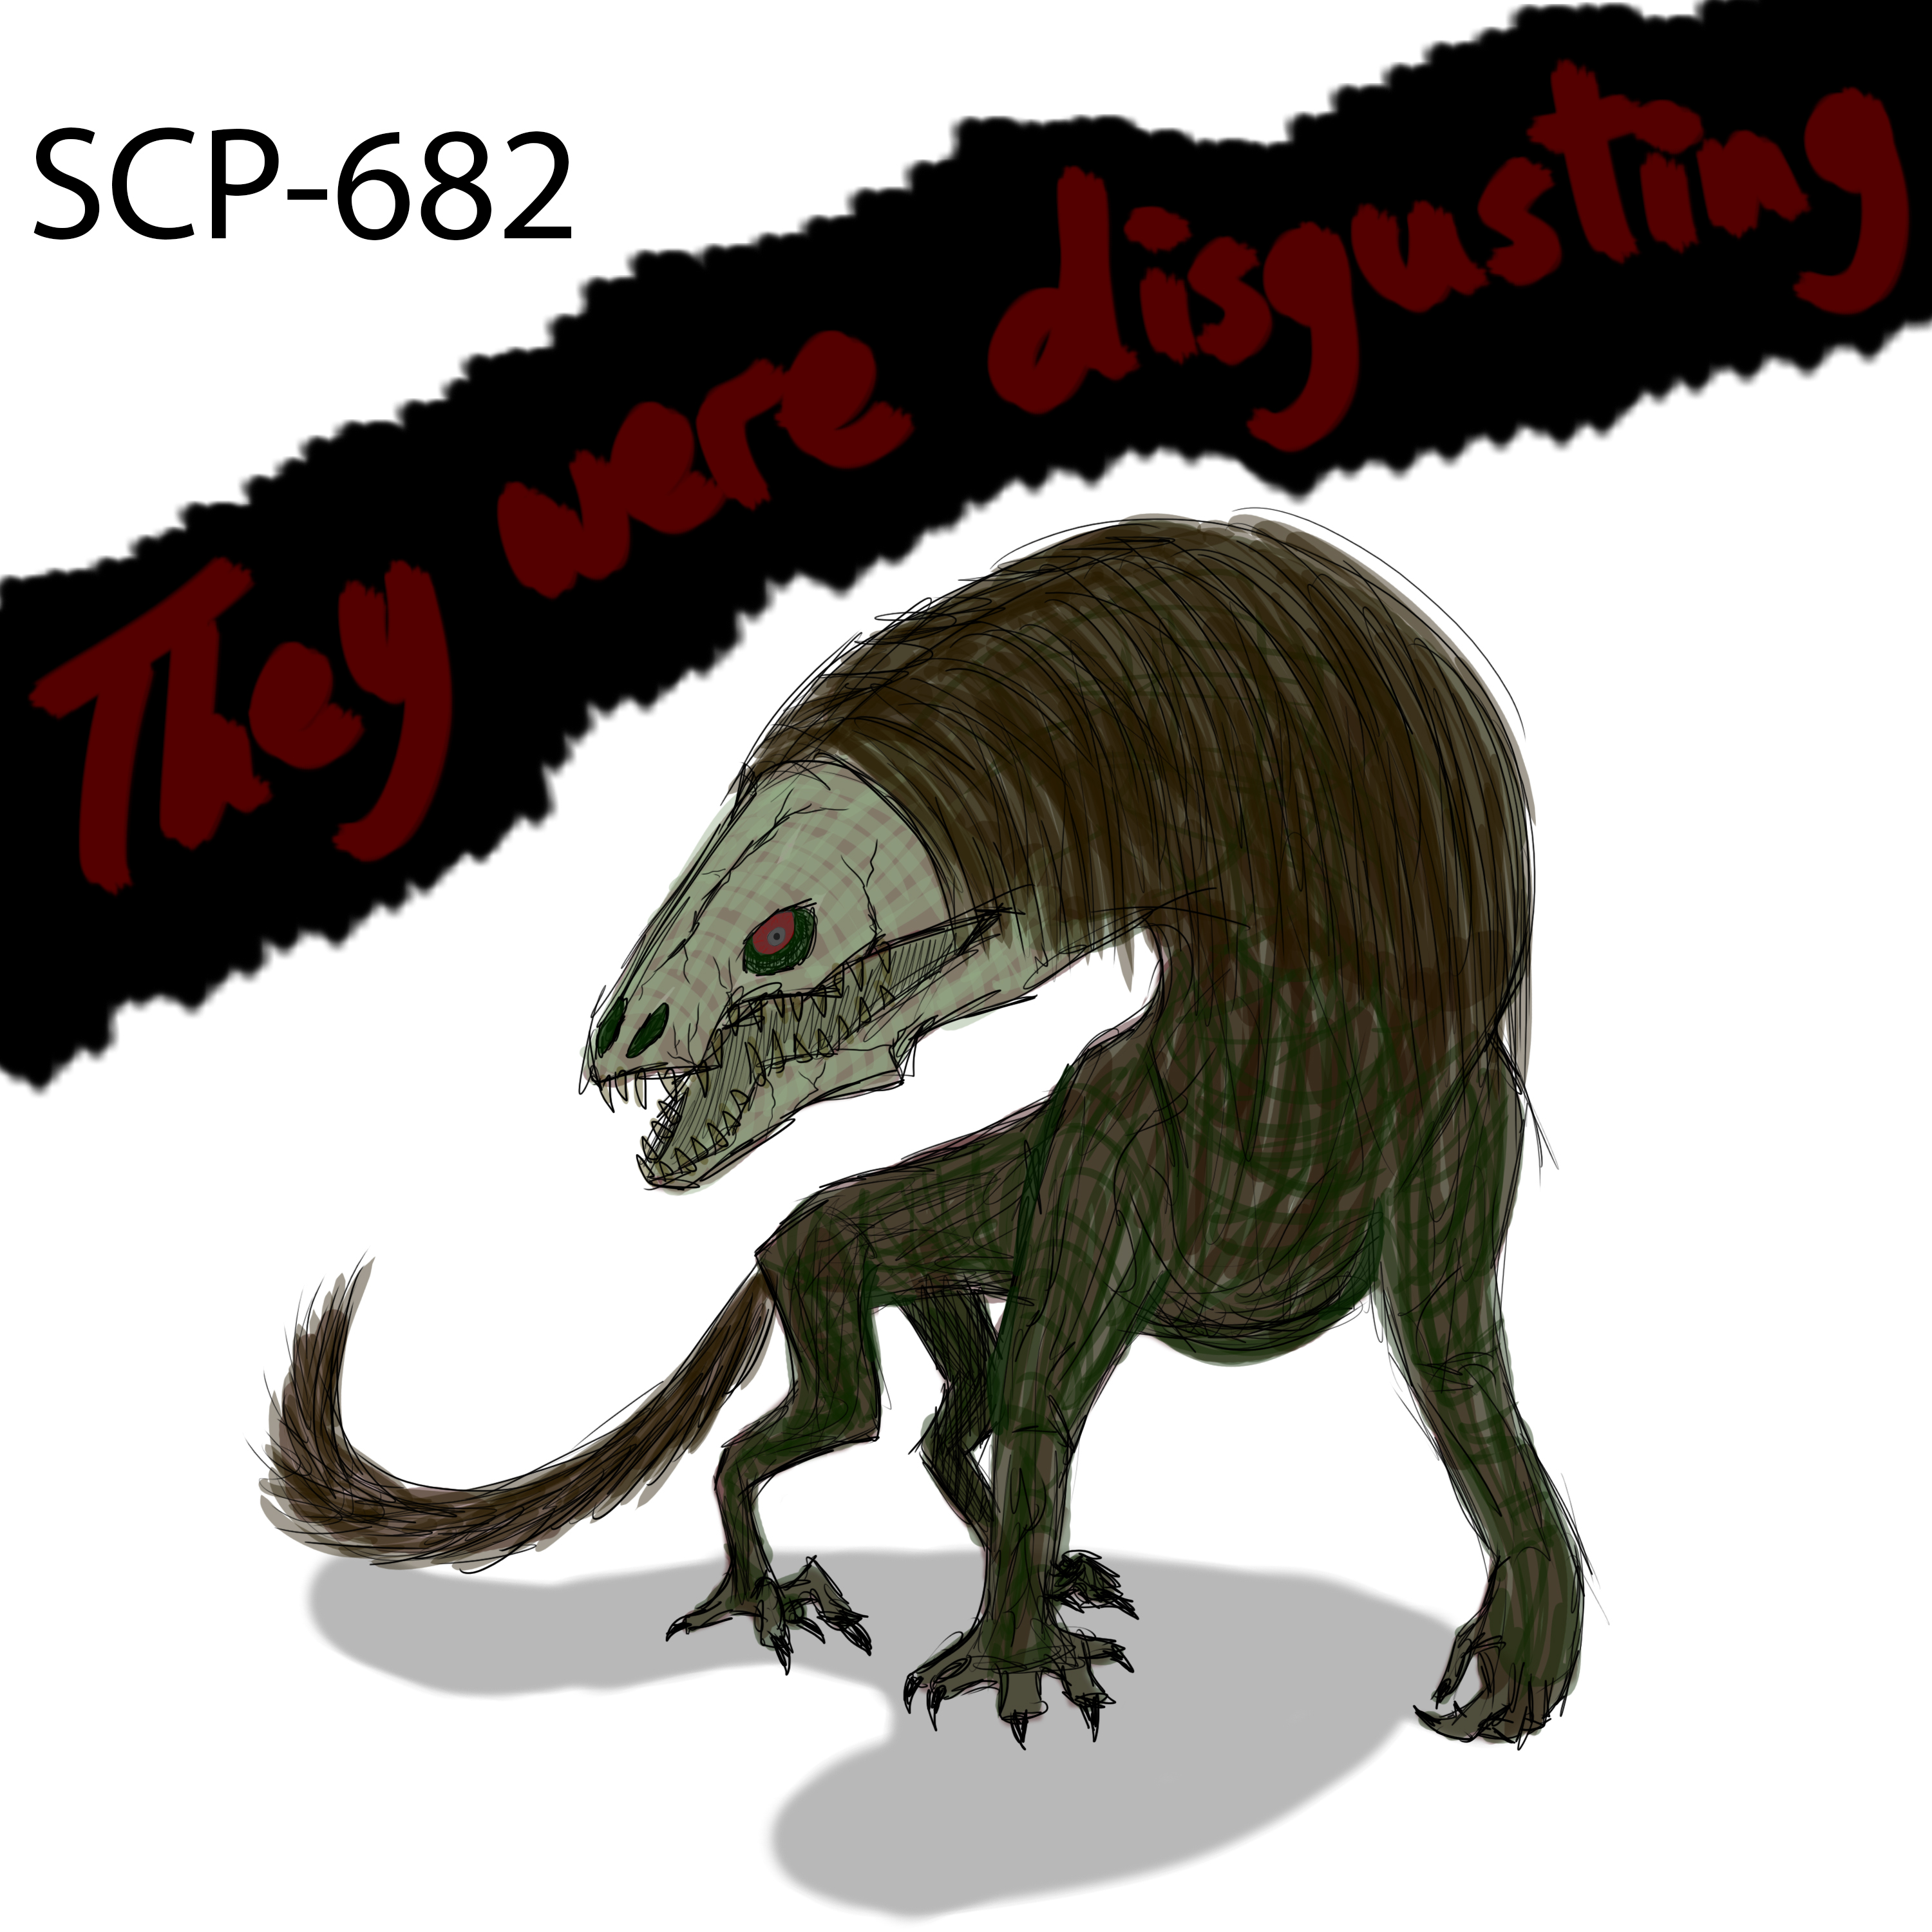 SaltyJaguar on X: So scp 3008-2s are described as deformed